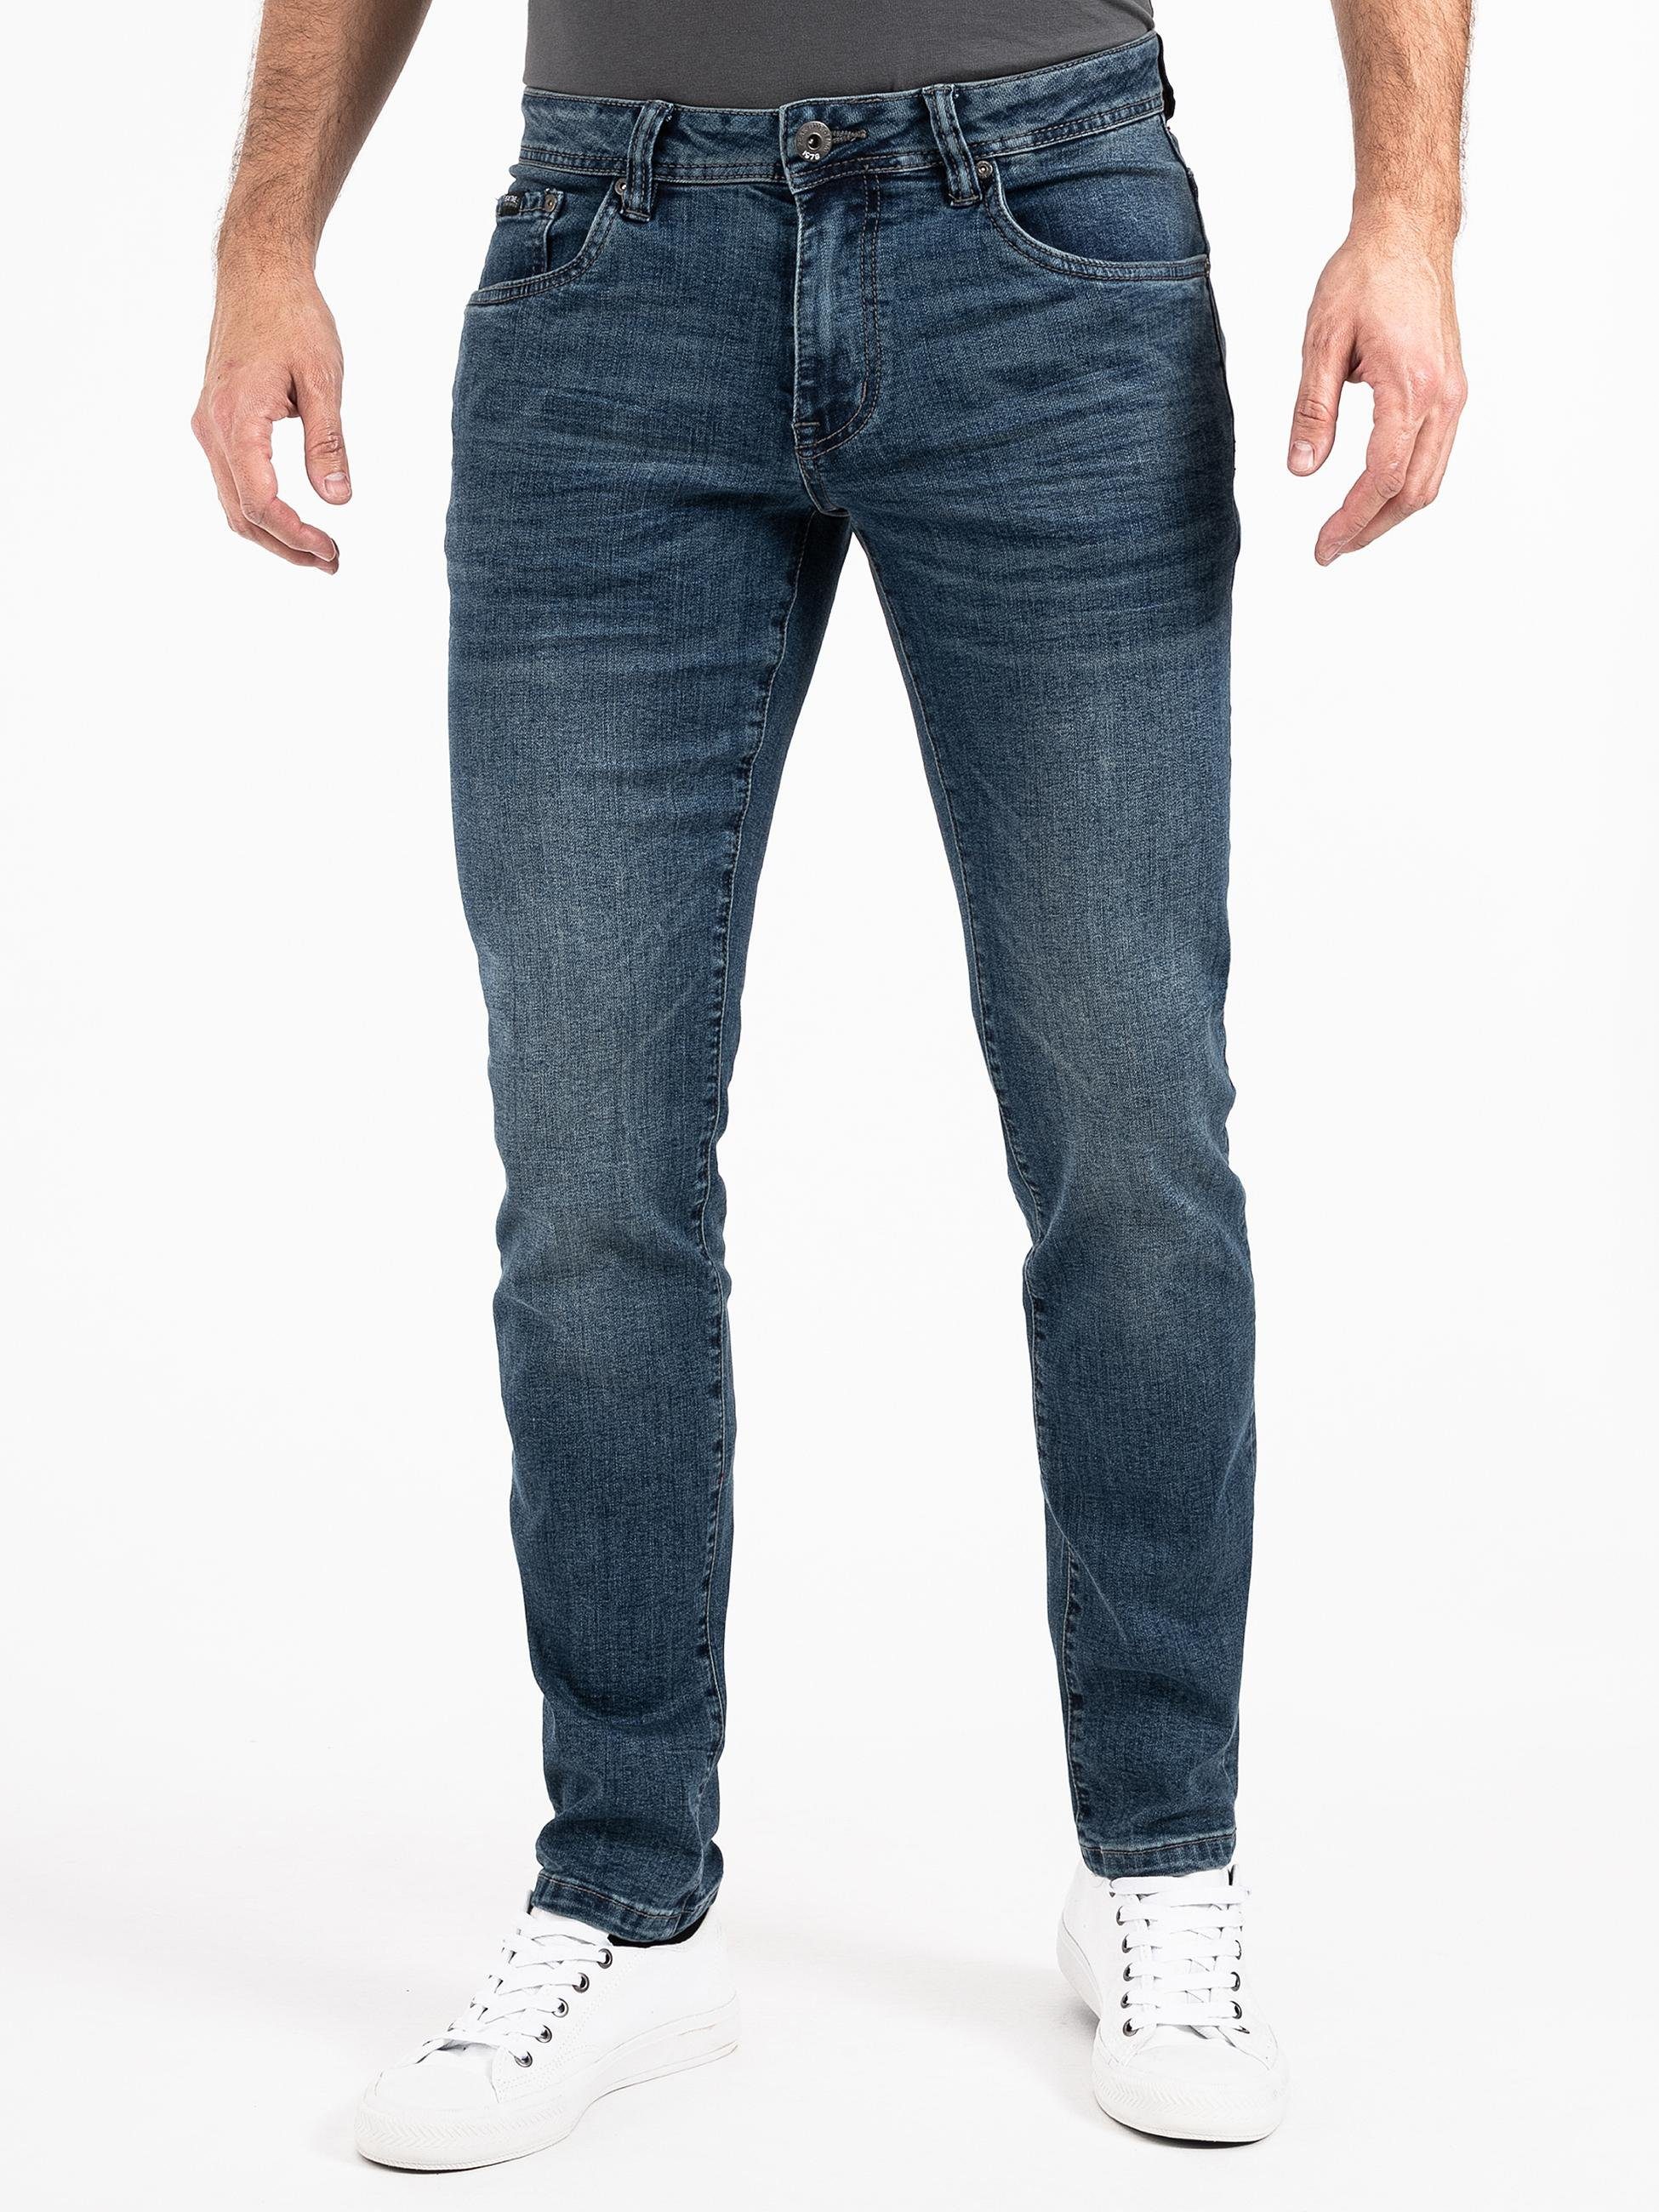 PEAK TIME Slim-fit-Jeans Mailand Herren mit Jeans blau Stretch-Anteil hohem super